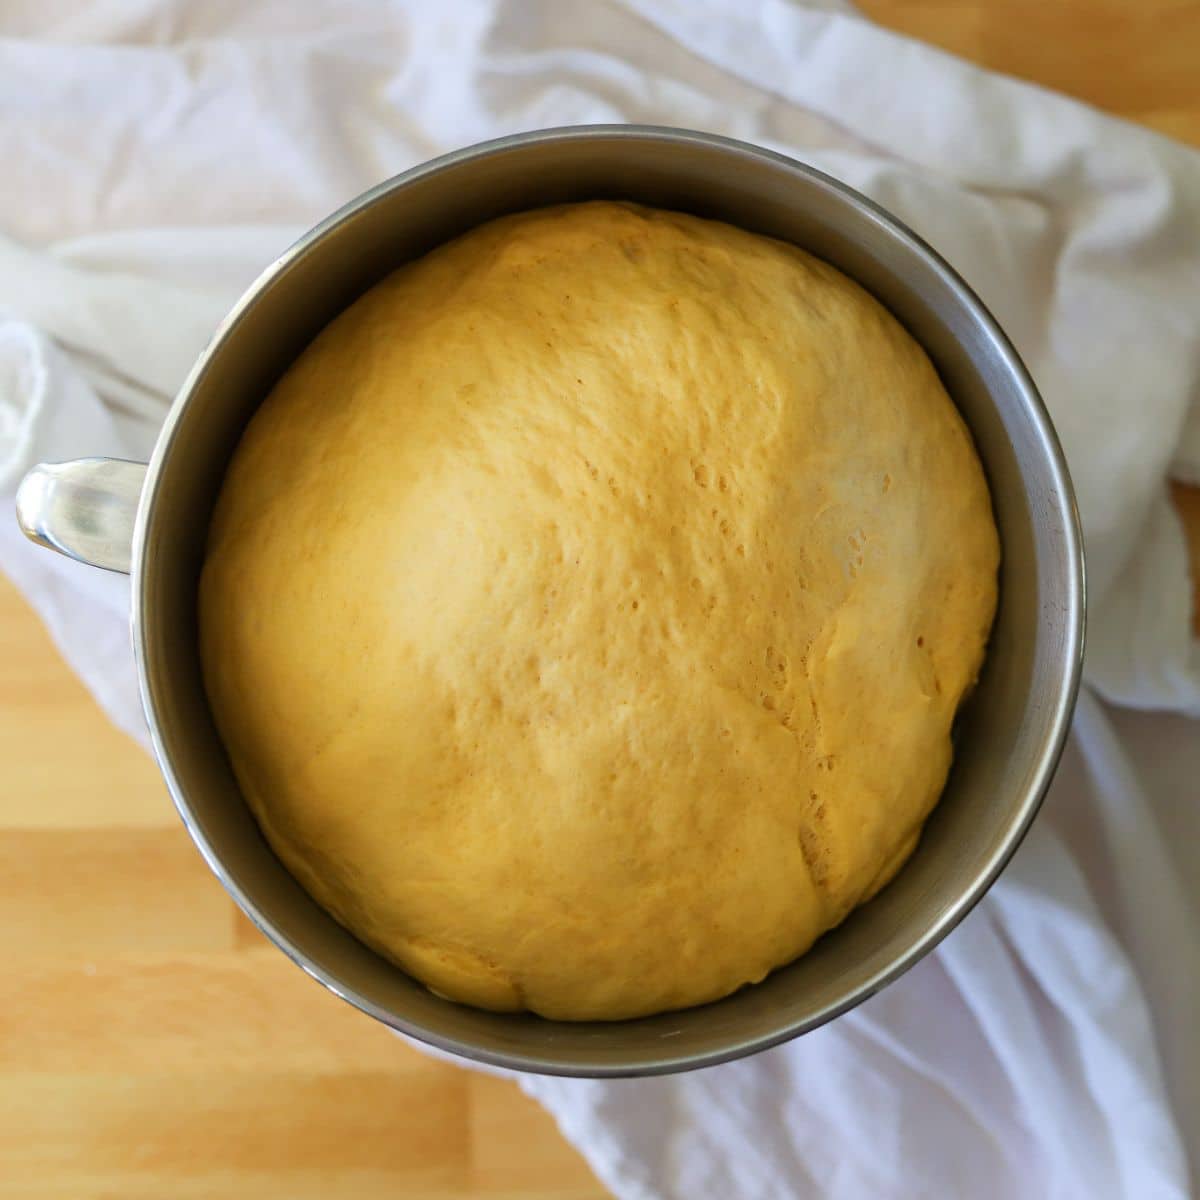 risen dough in a large mixing bowl.